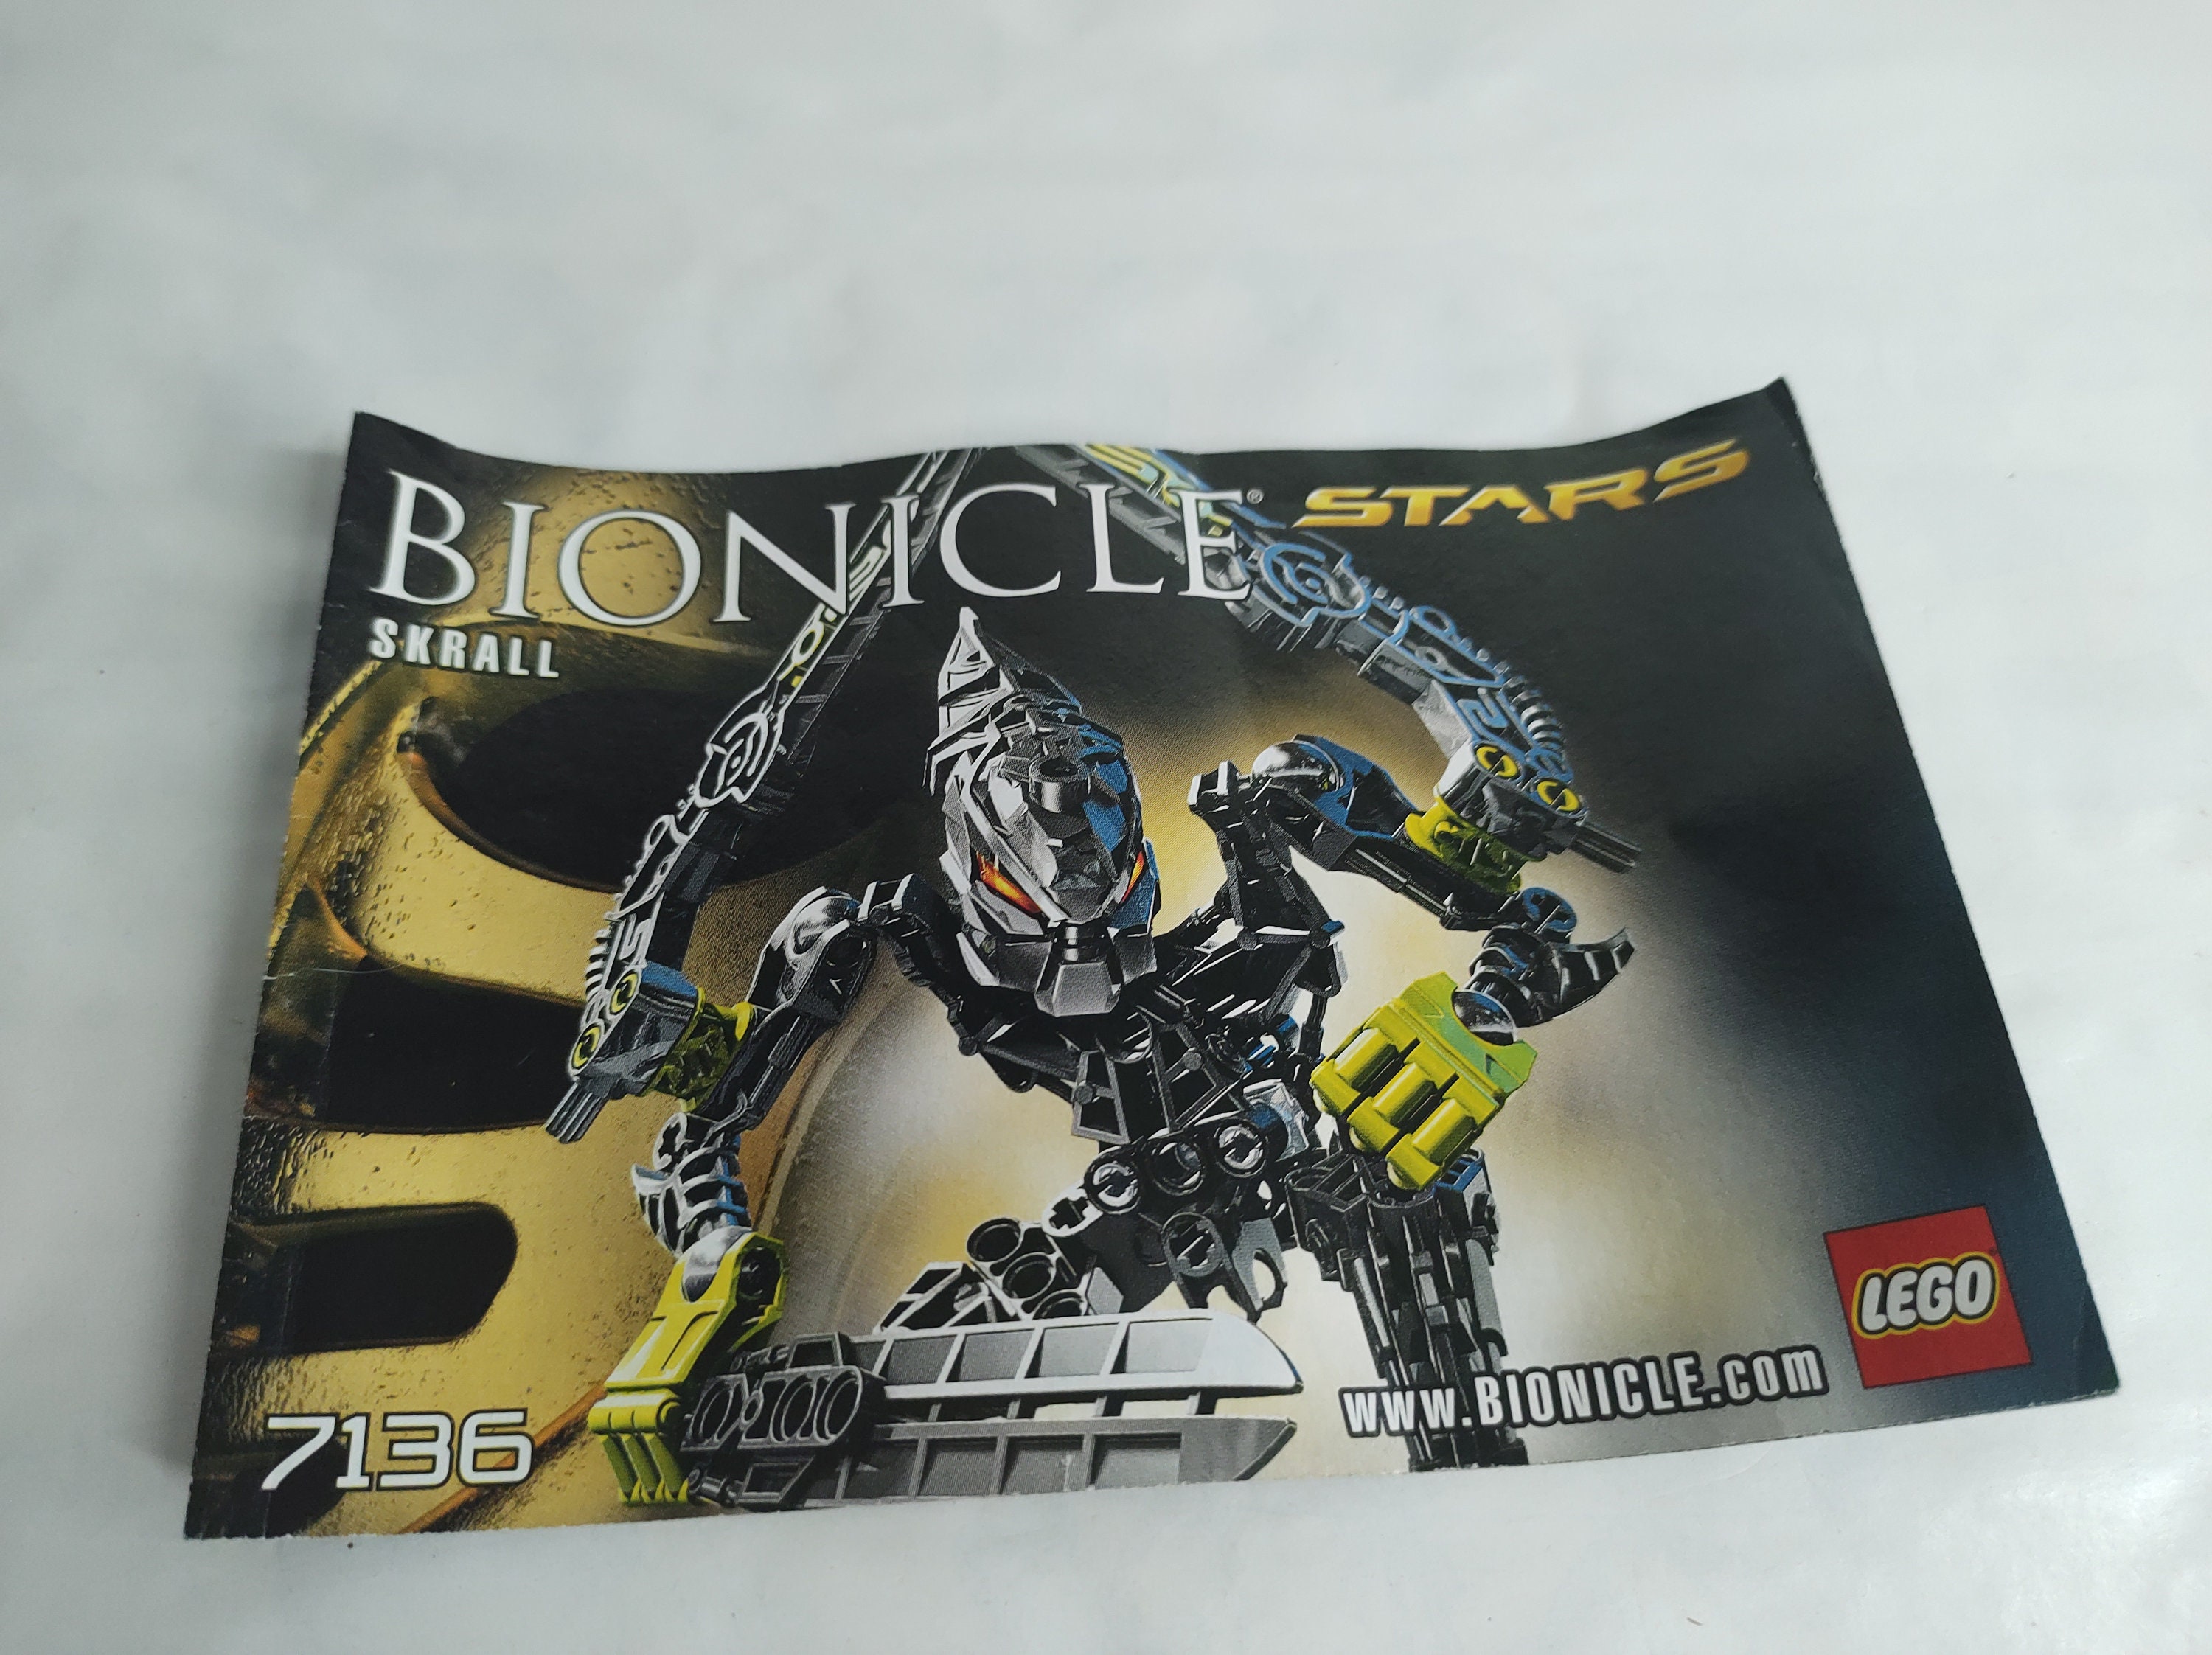 bionicle stars